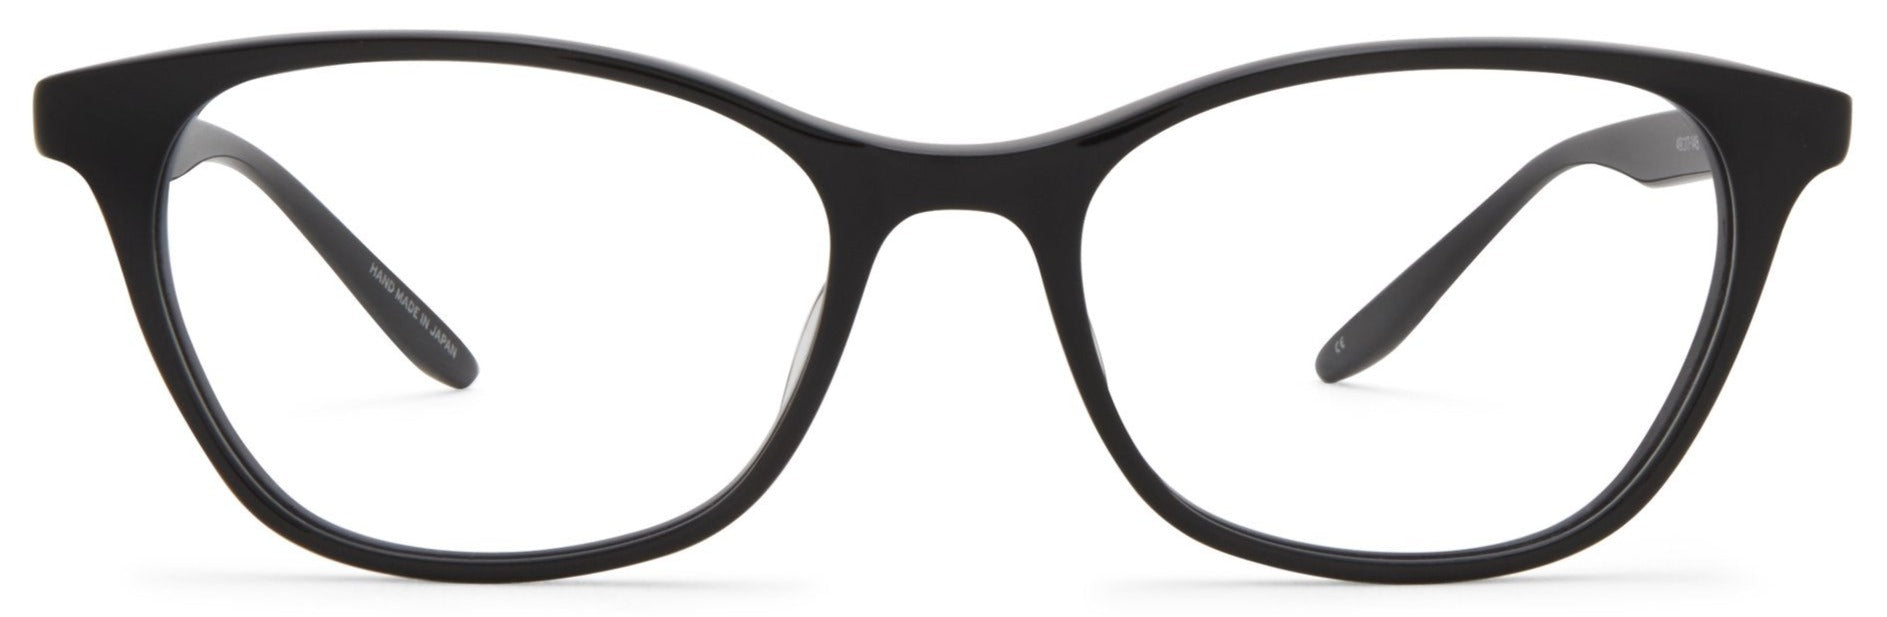 Alexander Daas - Barton Perreira Hettie Eyeglasses - Black - Front View